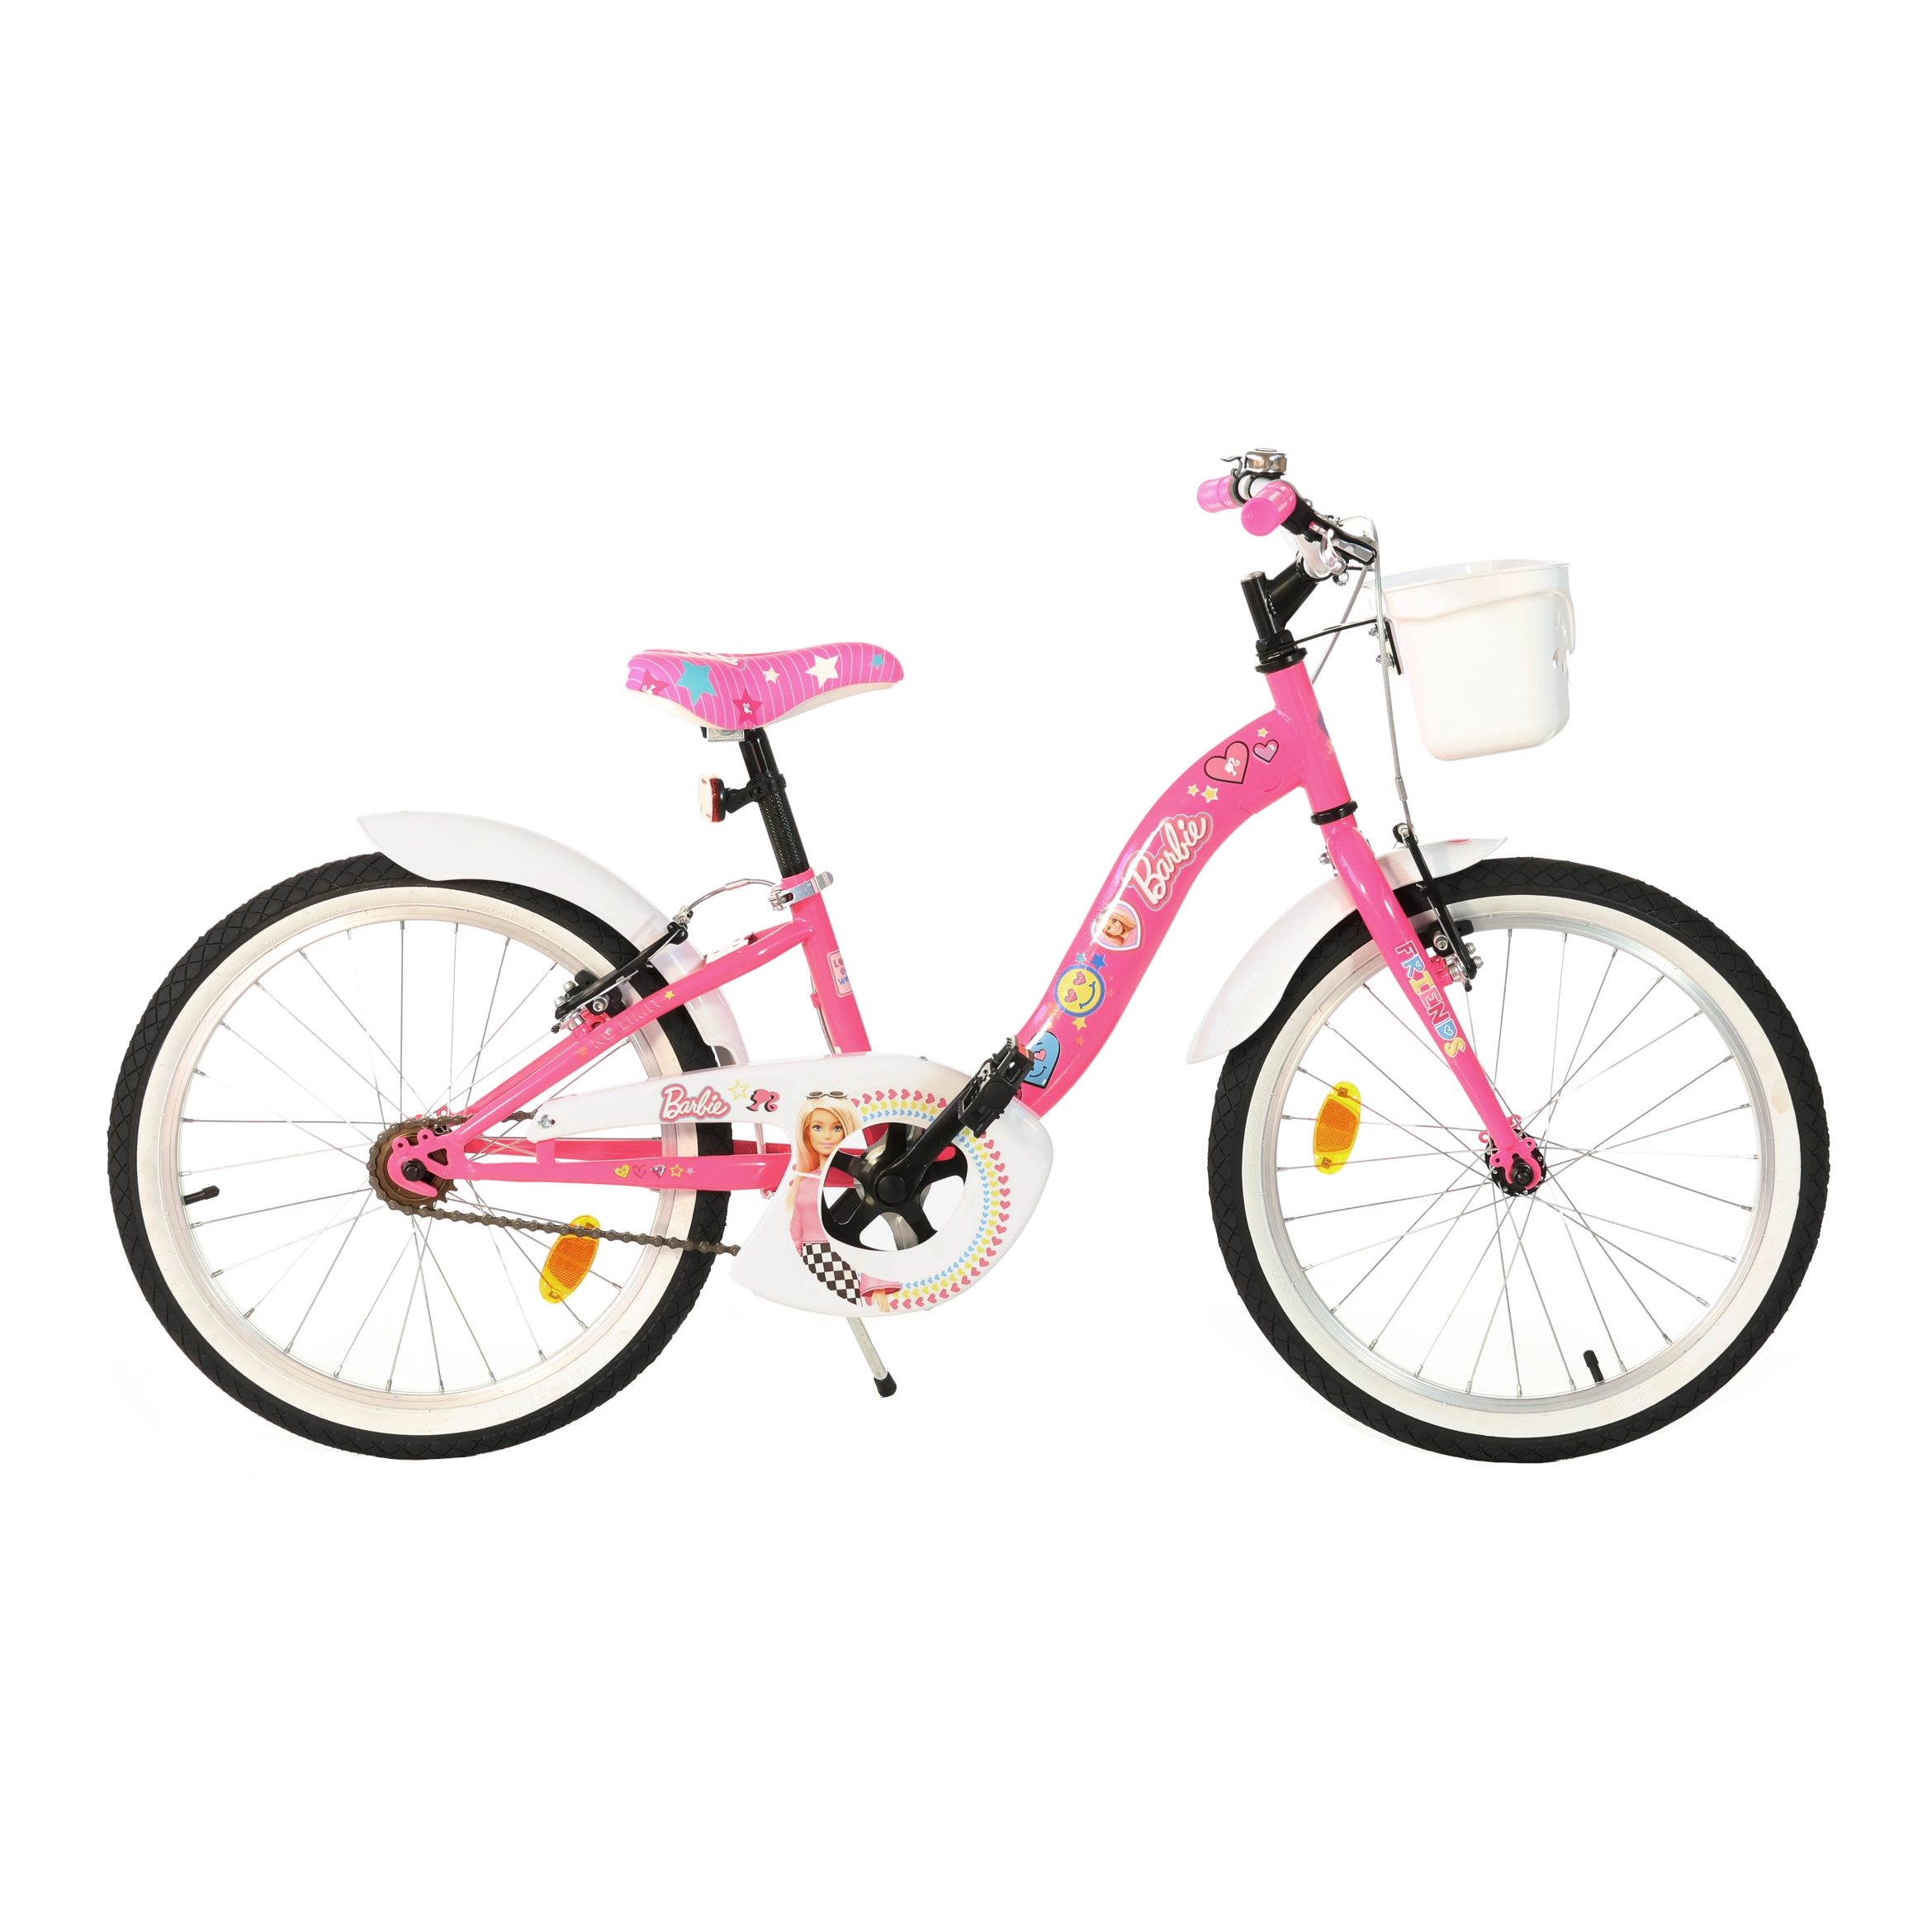 Bicicleta Barbie - rosa - 